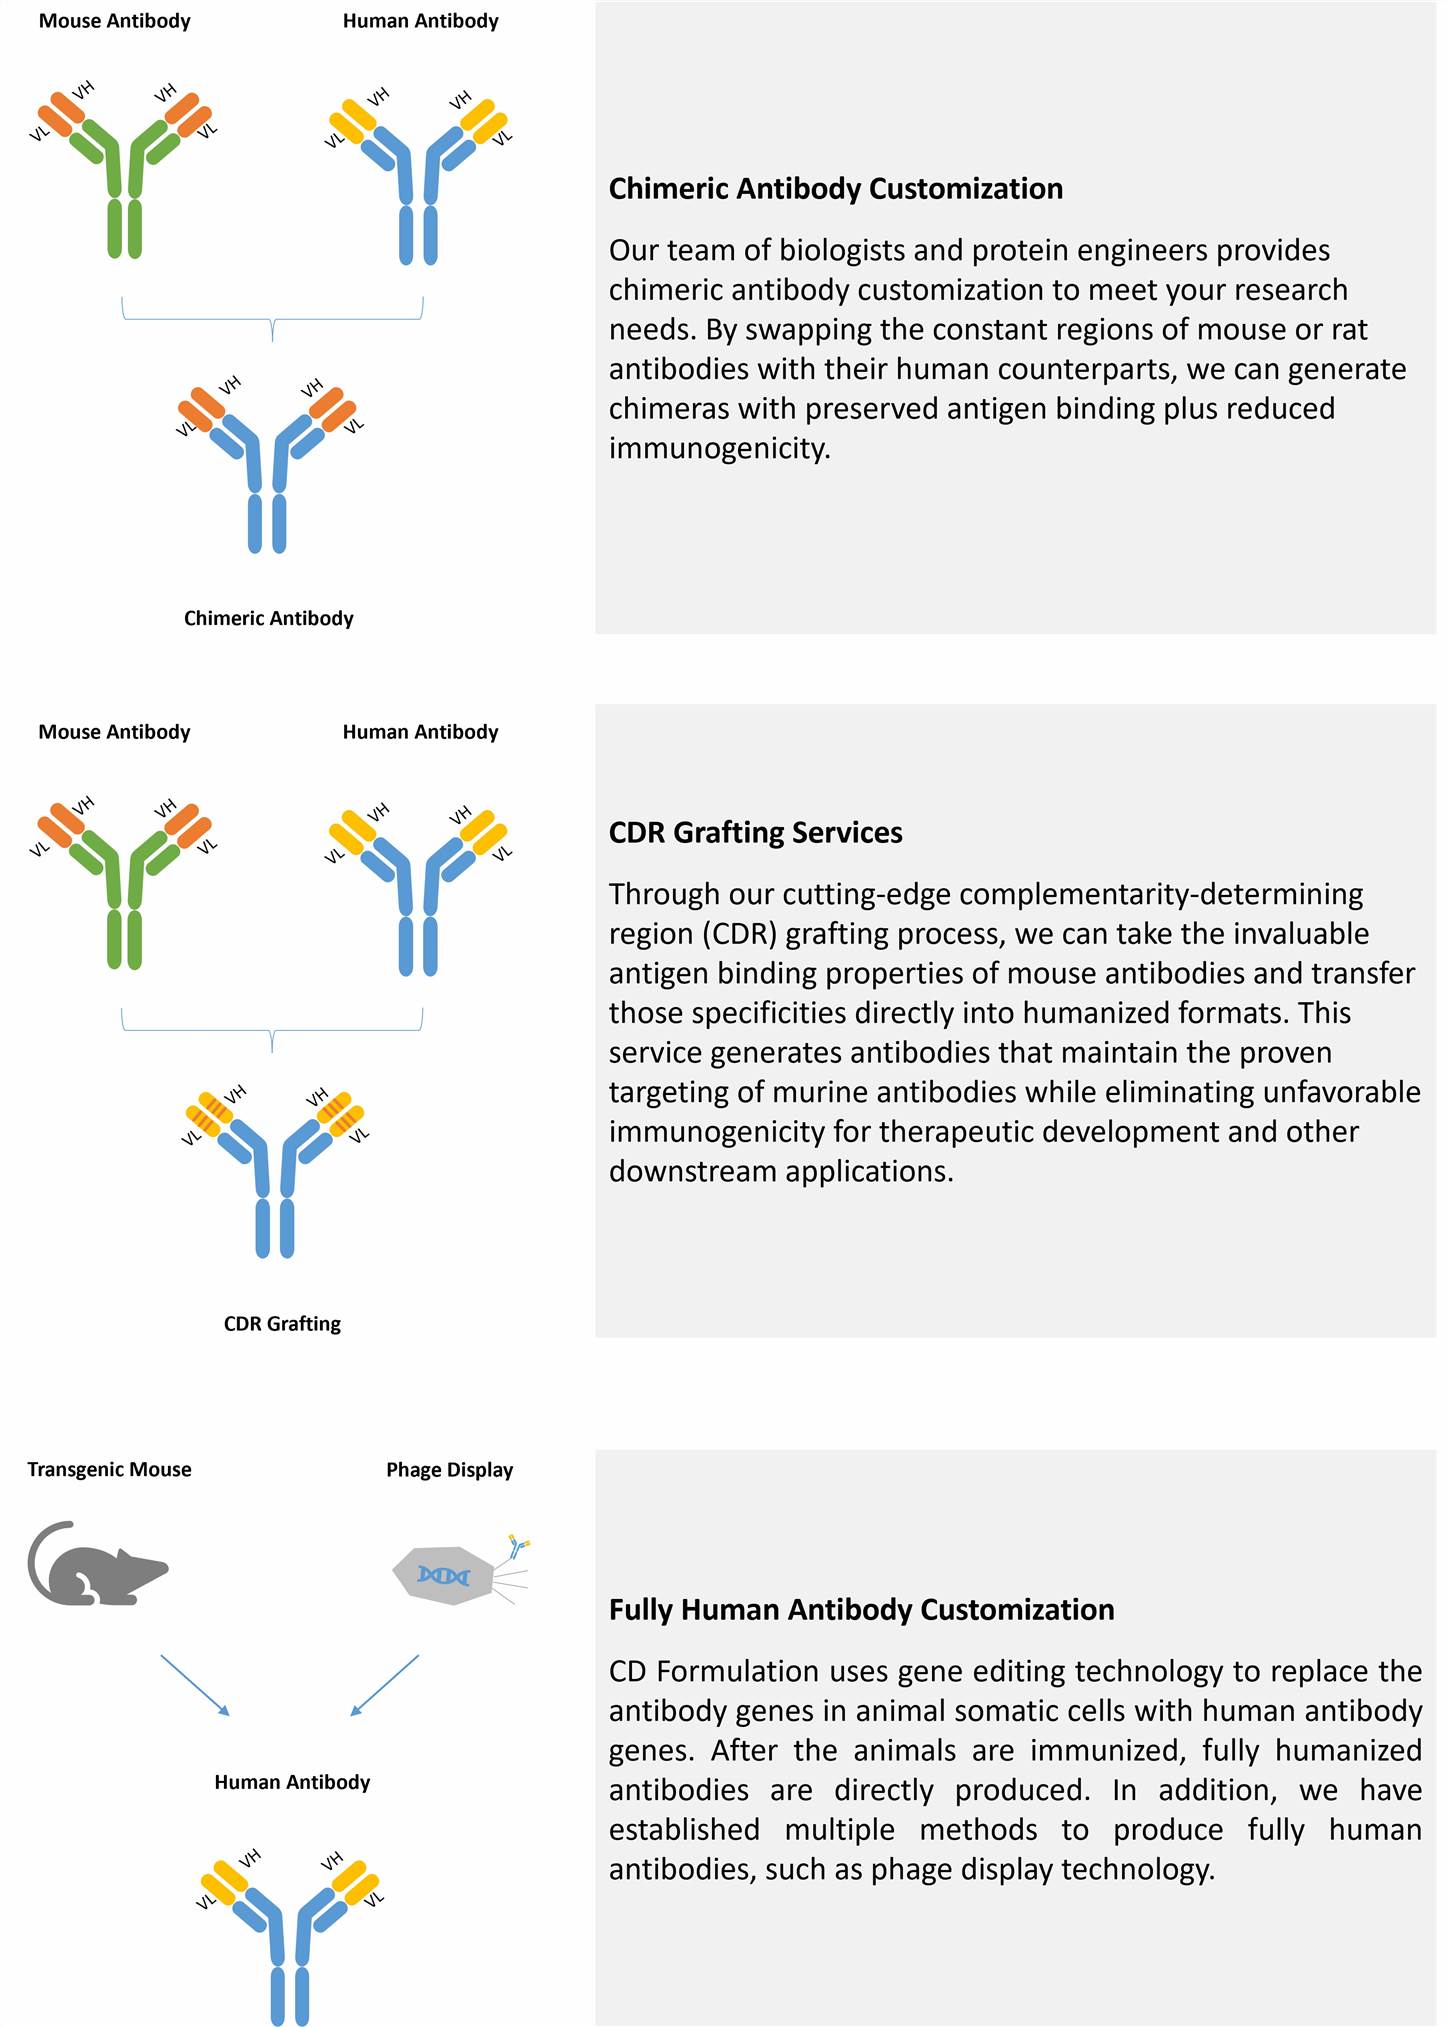 Types of Antibody Humanization Services – CD Formulation